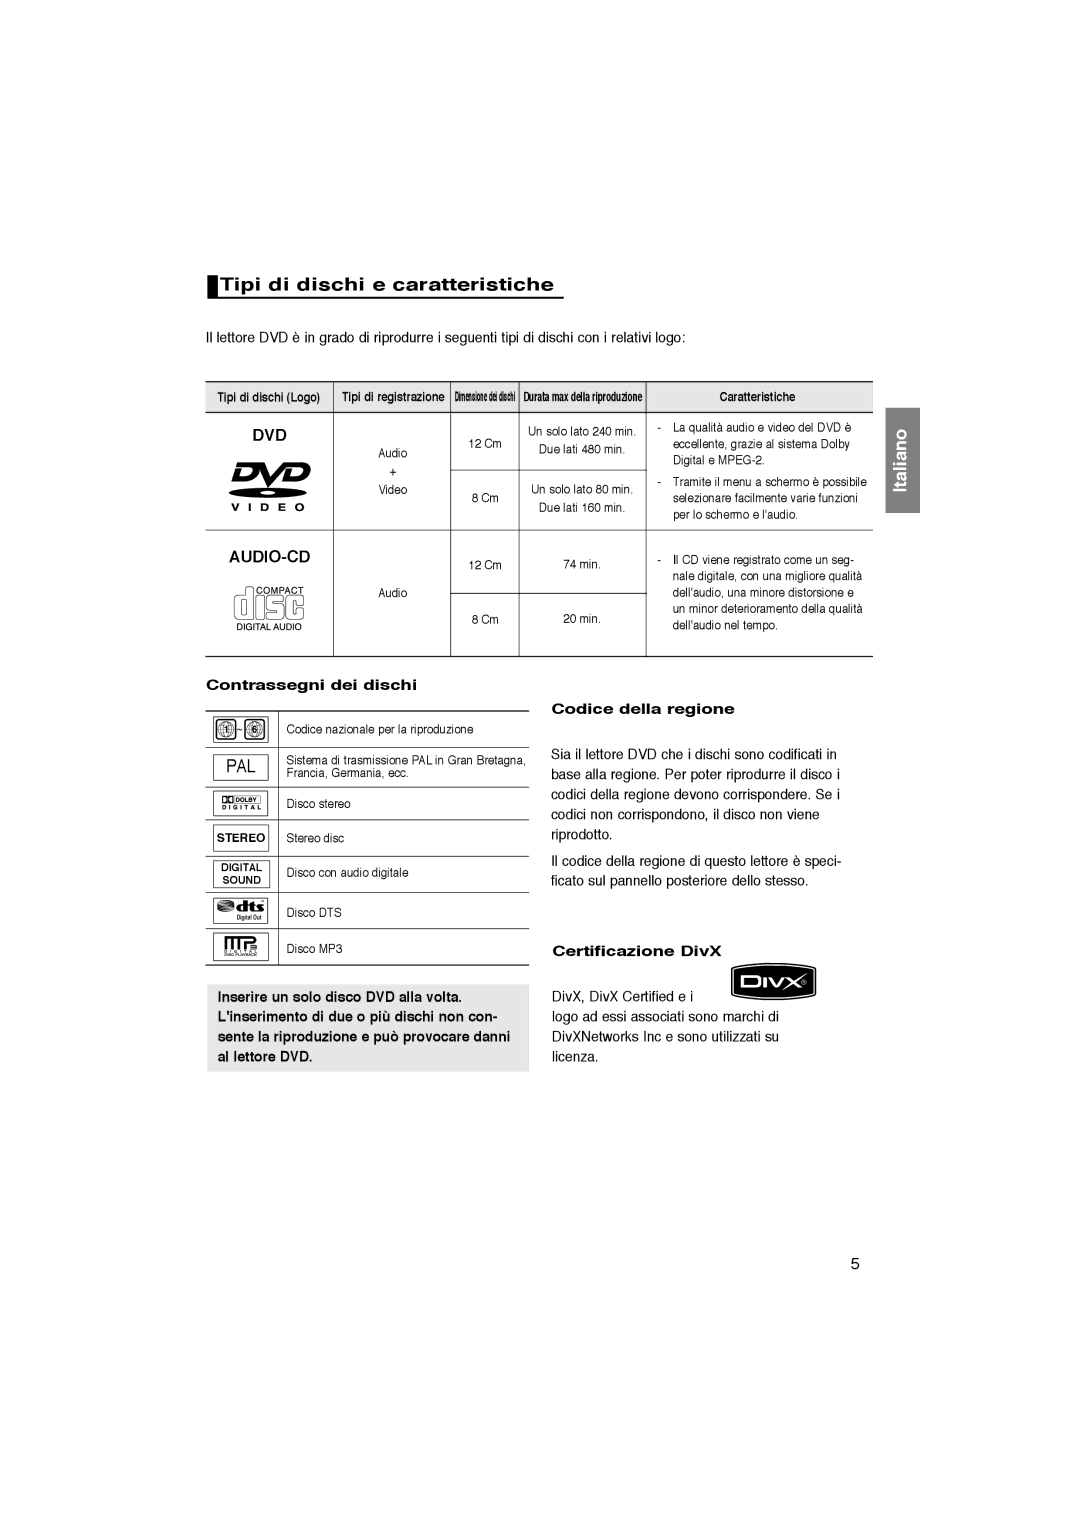 Samsung DVD-1080P8/XET Tipi di dischi e caratteristiche, Contrassegni dei dischi, Certificazione DivX, Caratteristiche 